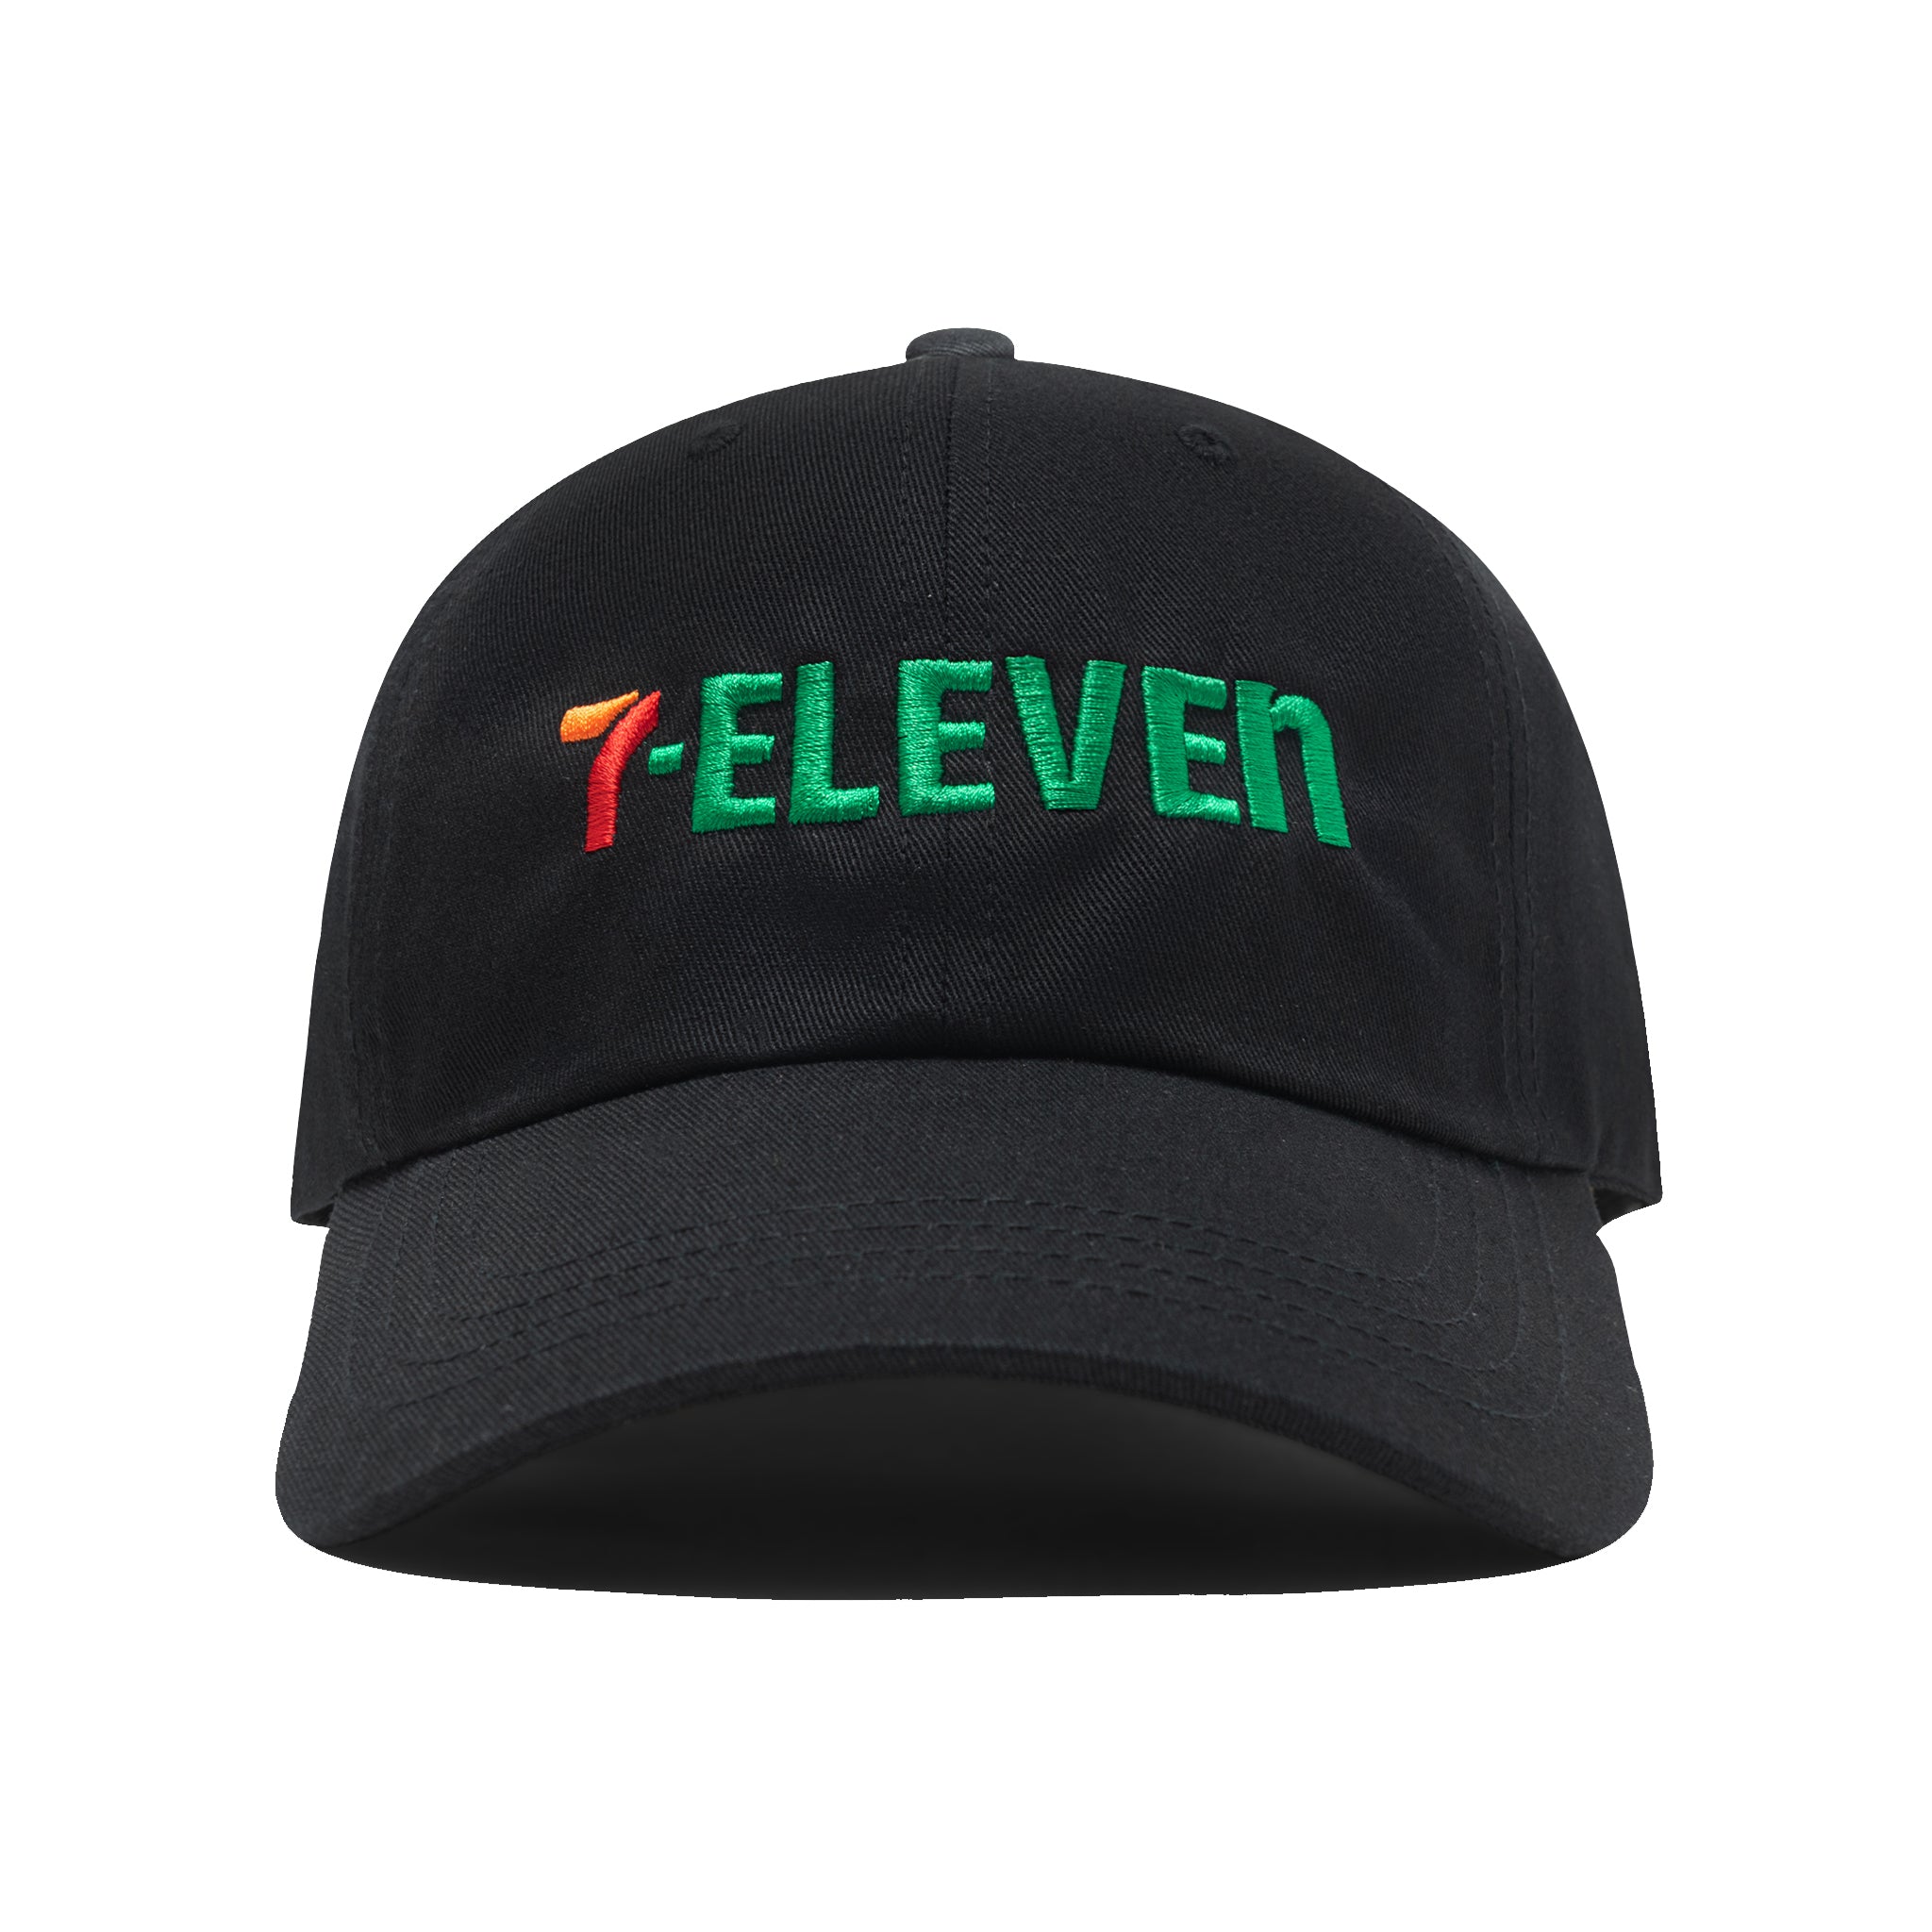 Cars of 7-Eleven™ Stripes Trucker Hat